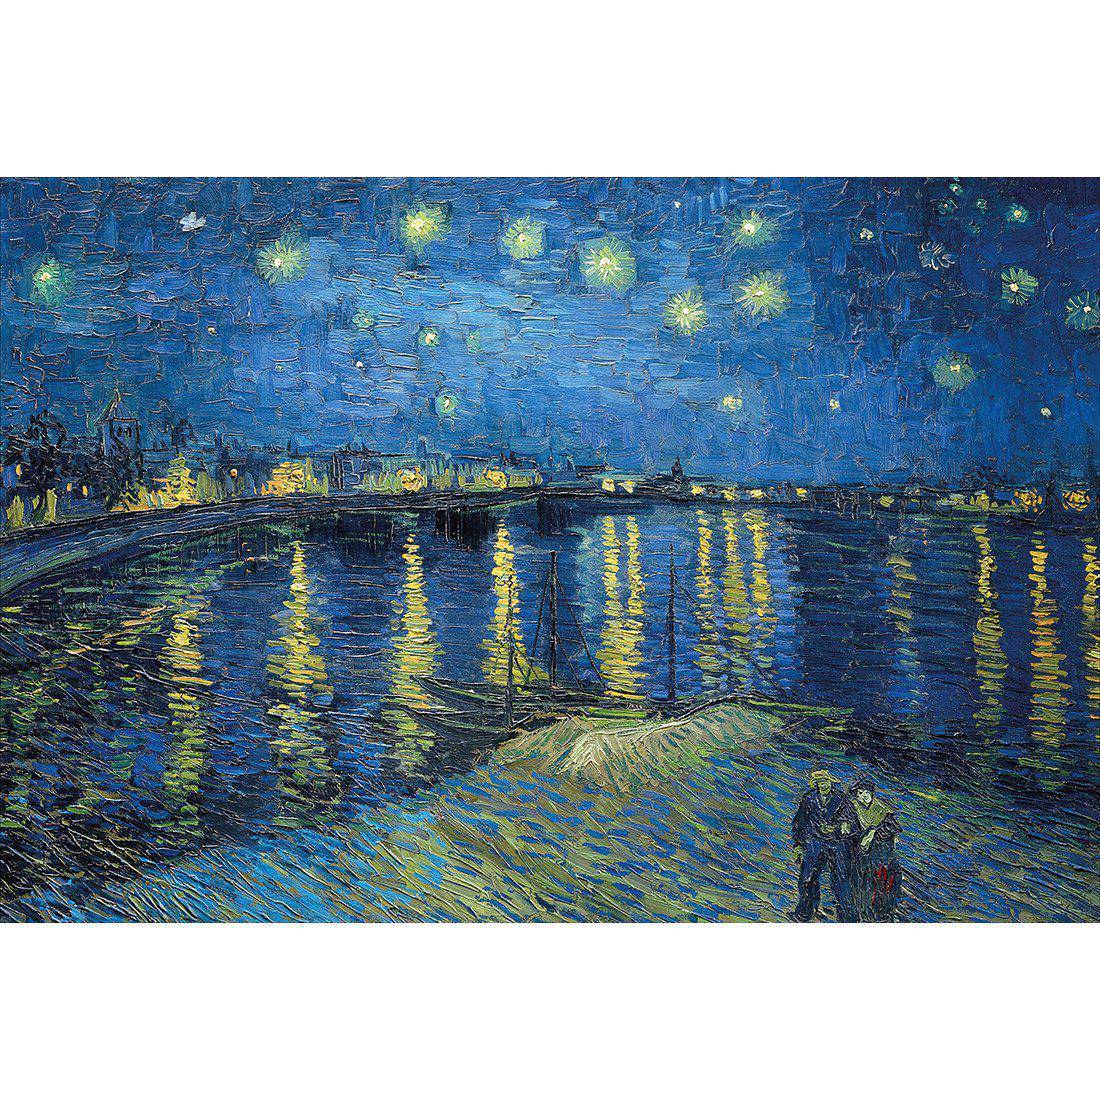 Starry Night Over the Rhone - Van Gogh Canvas Art-Canvas-Wall Art Designs-45x30cm-Canvas - No Frame-Wall Art Designs